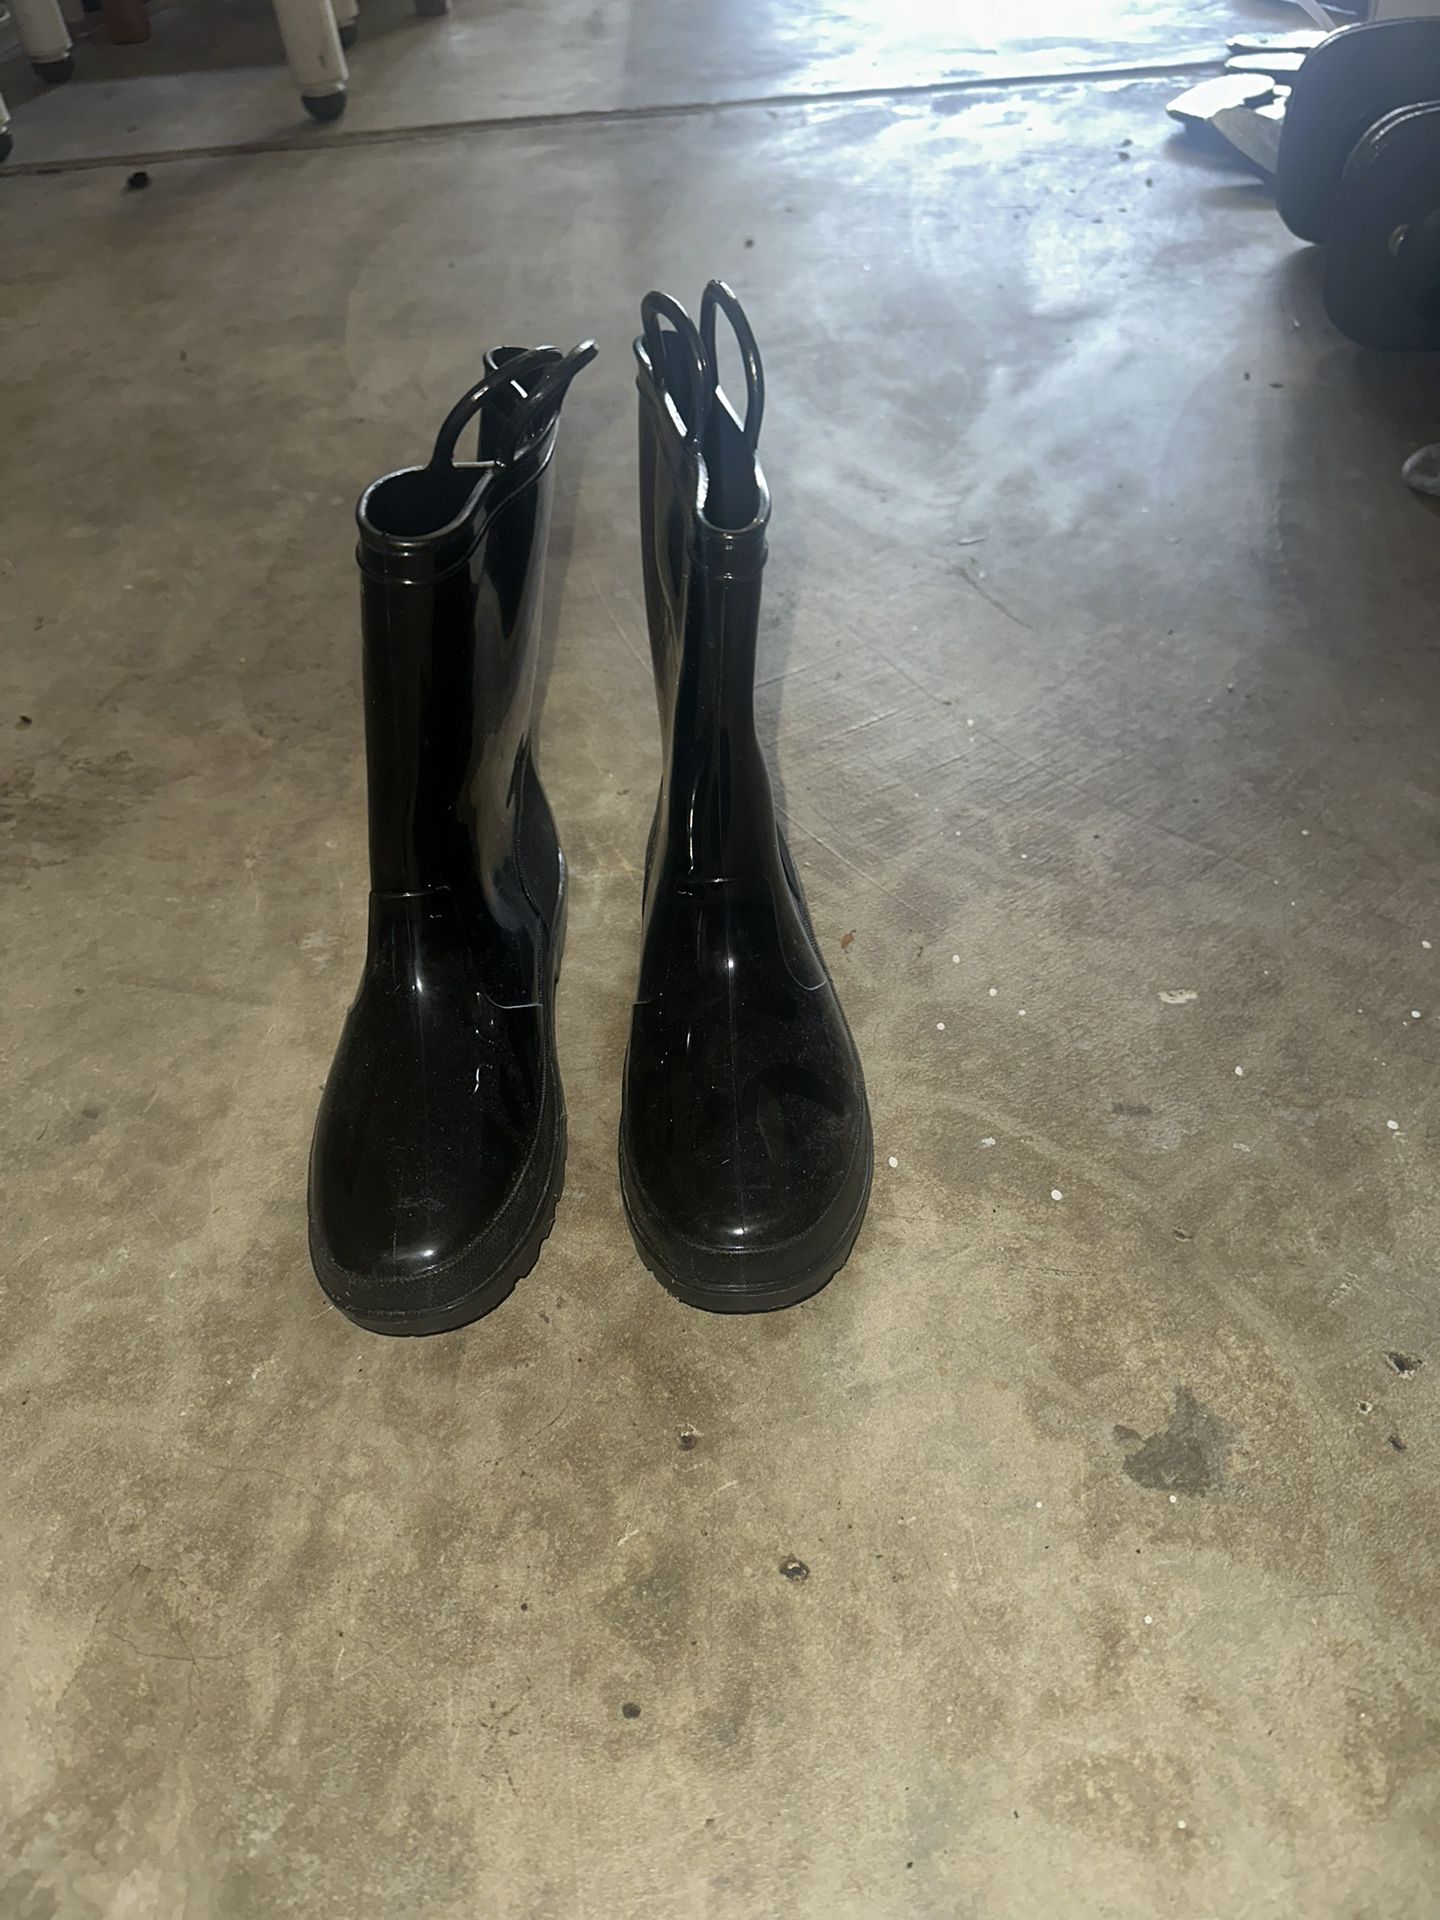 Rubber rain boots, boys size 6